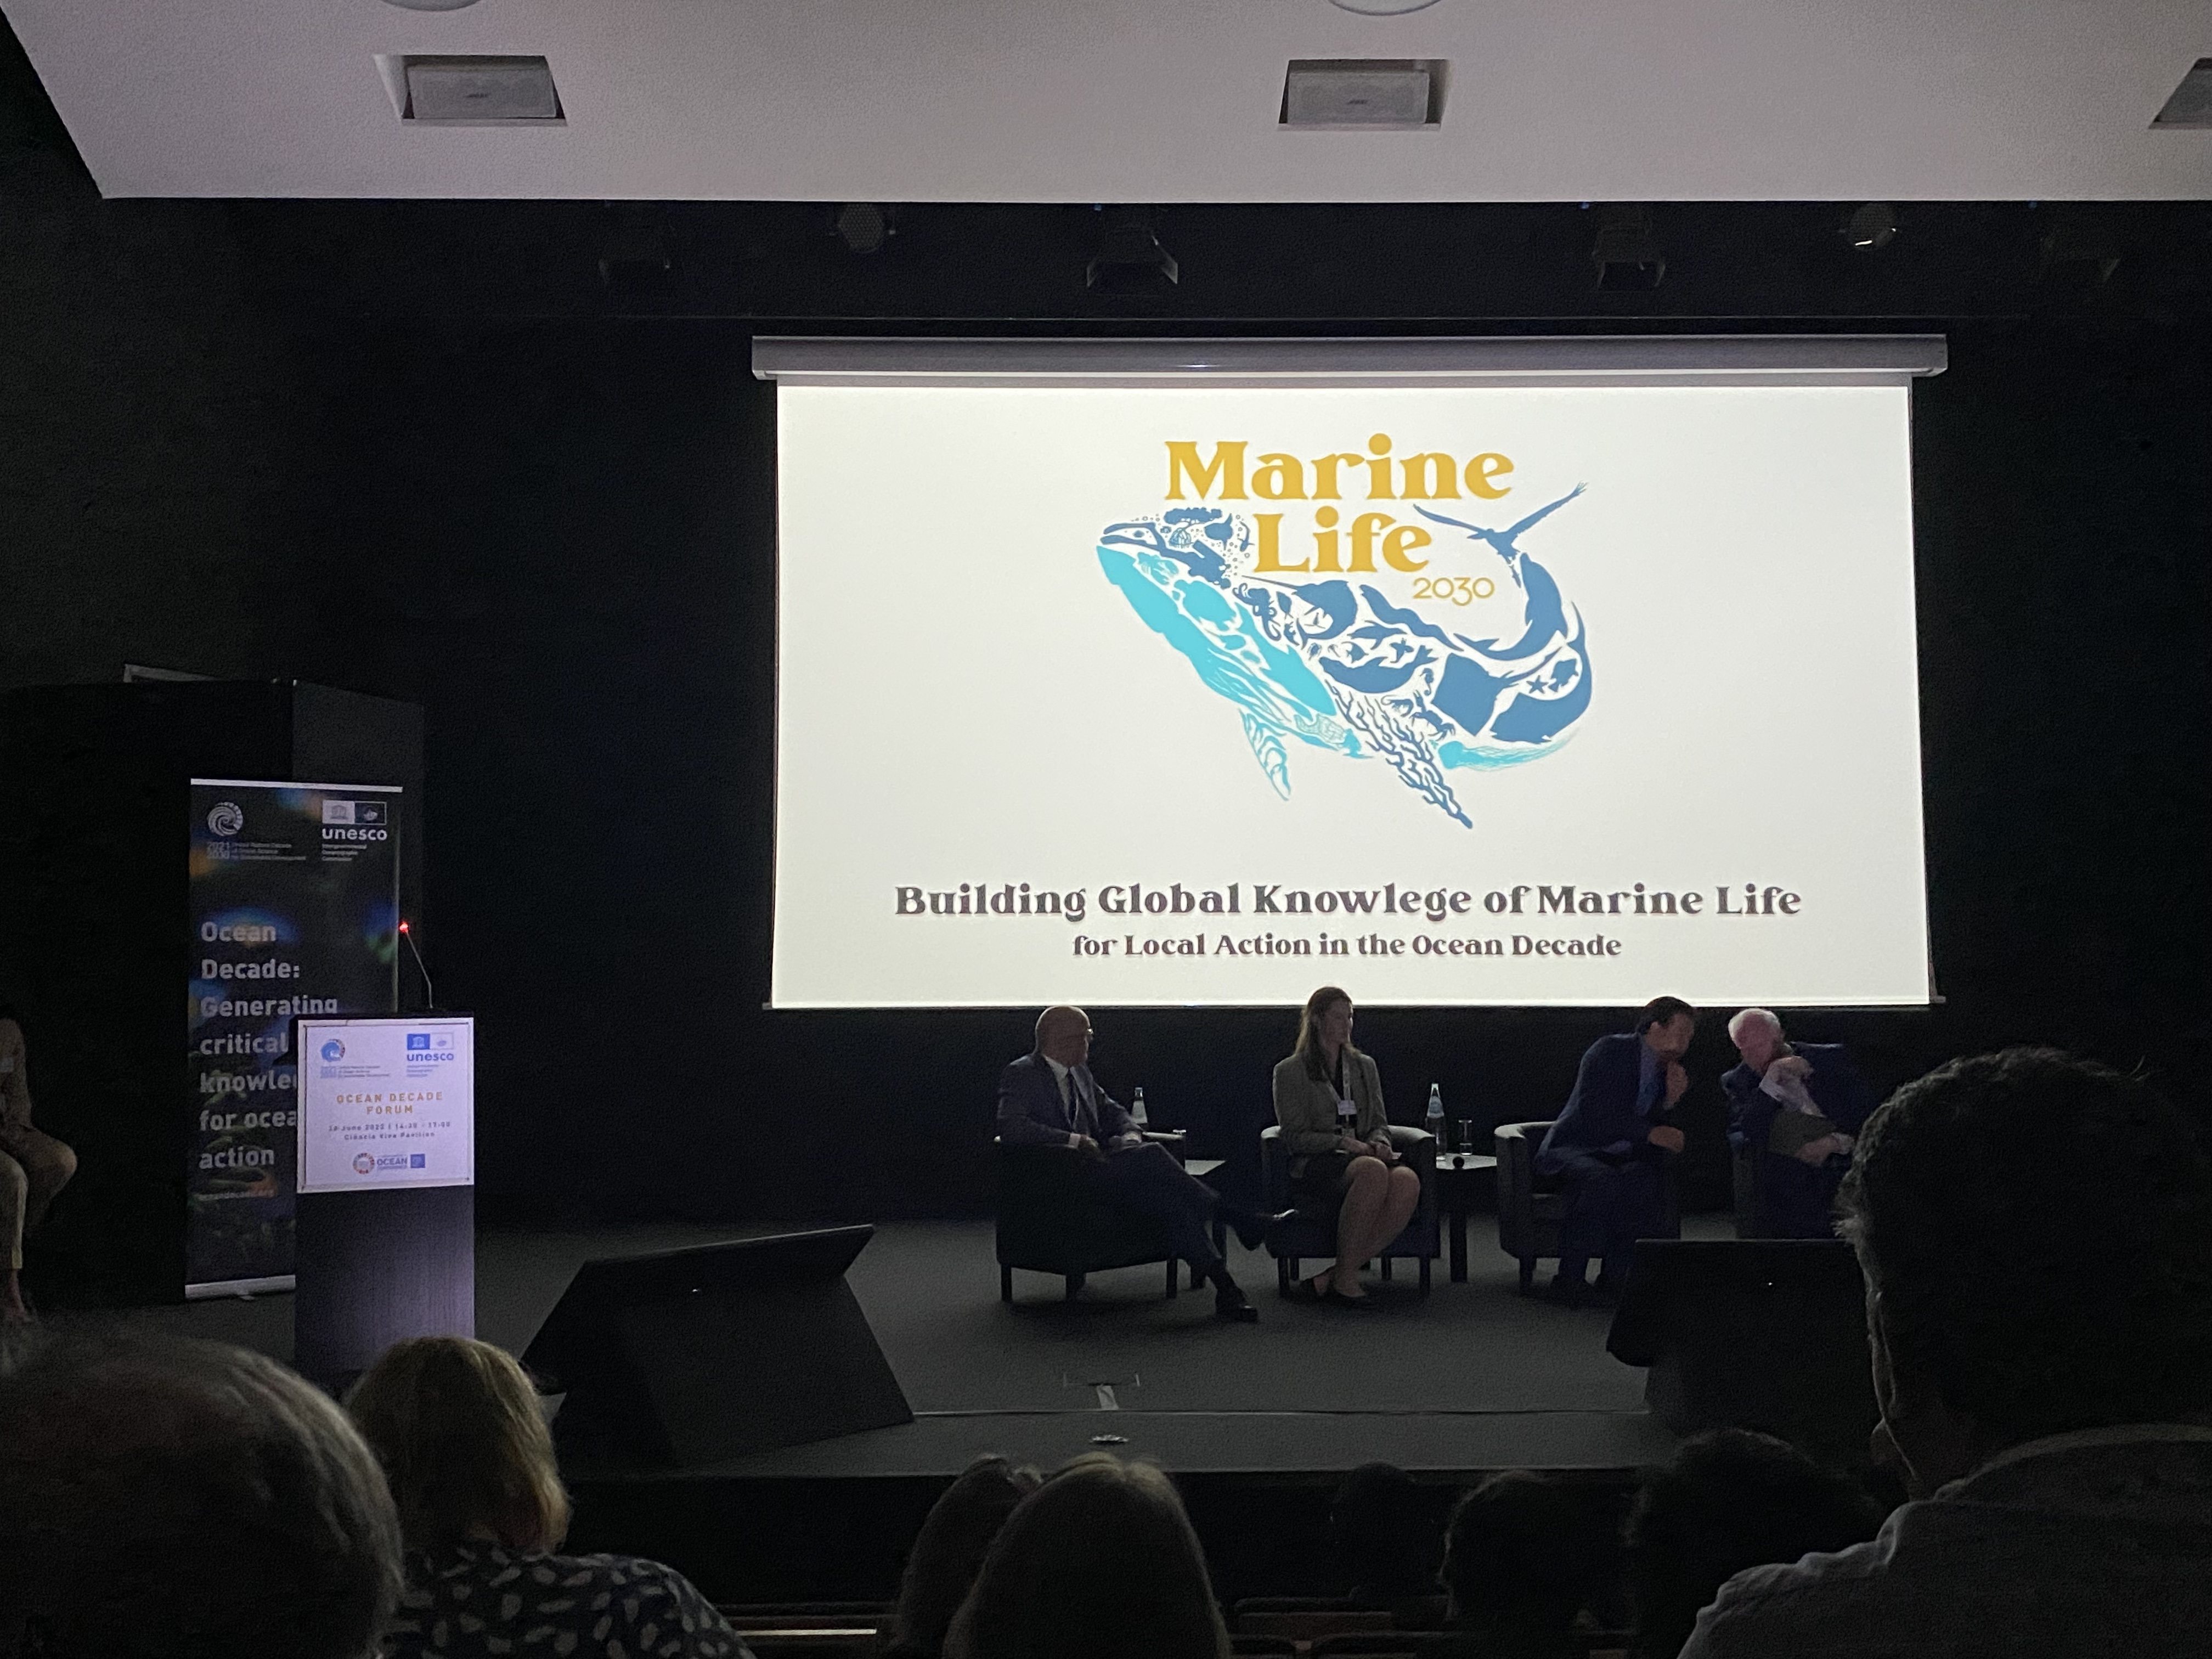 Marine Life 2030 at the UN Ocean Decade Forum